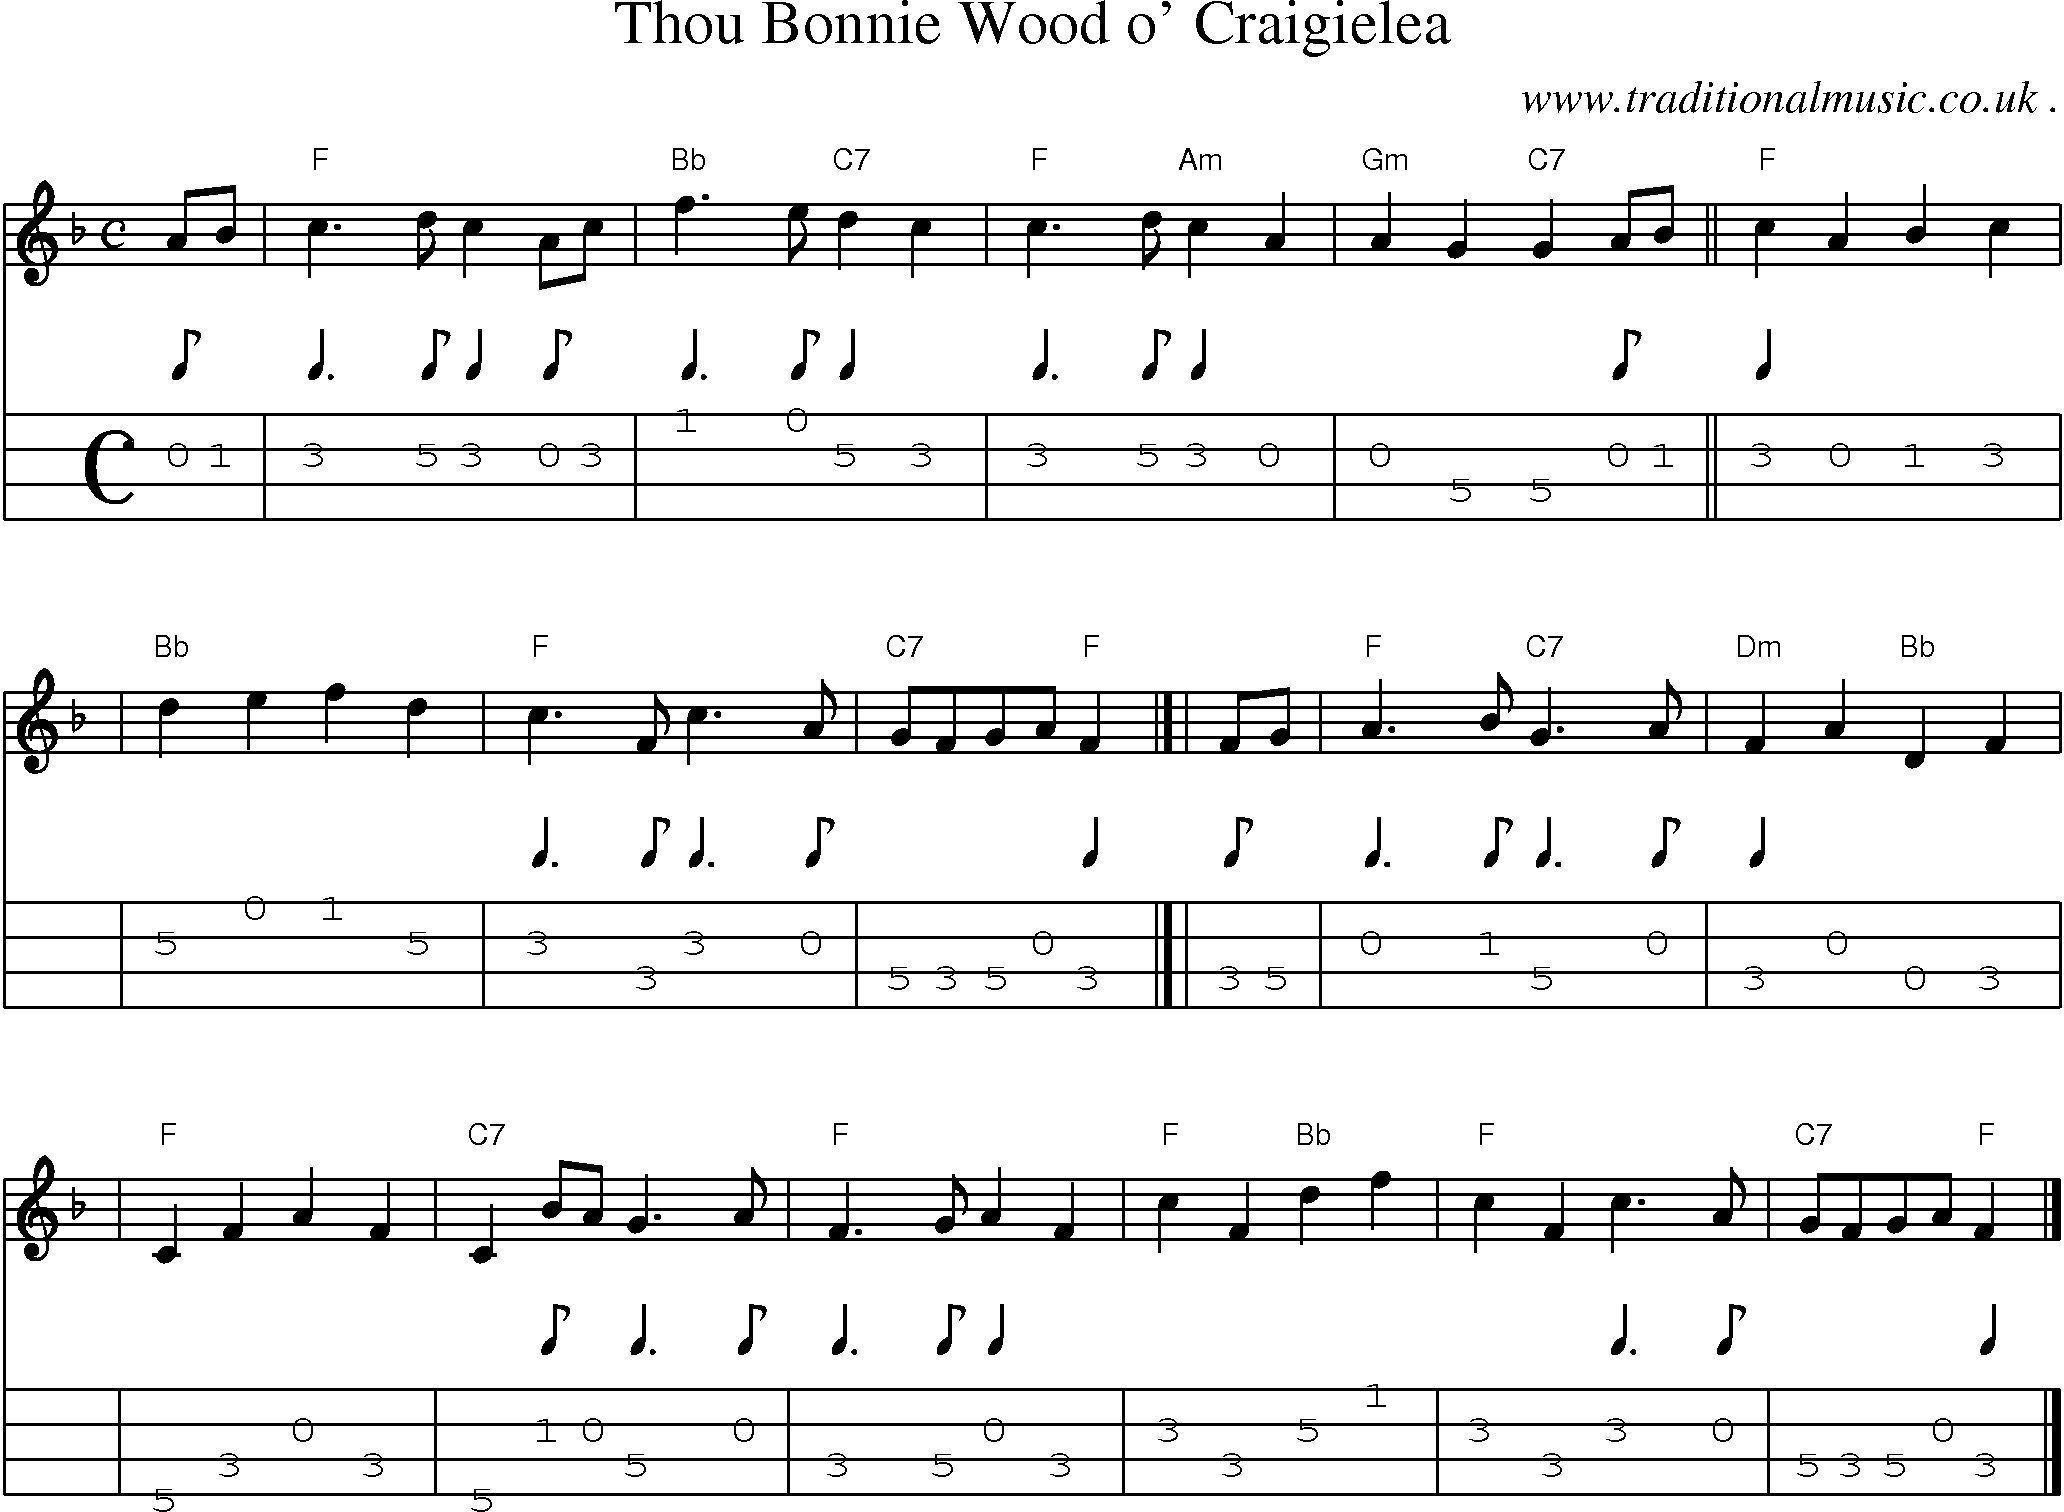 Sheet-music  score, Chords and Mandolin Tabs for Thou Bonnie Wood O Craigielea